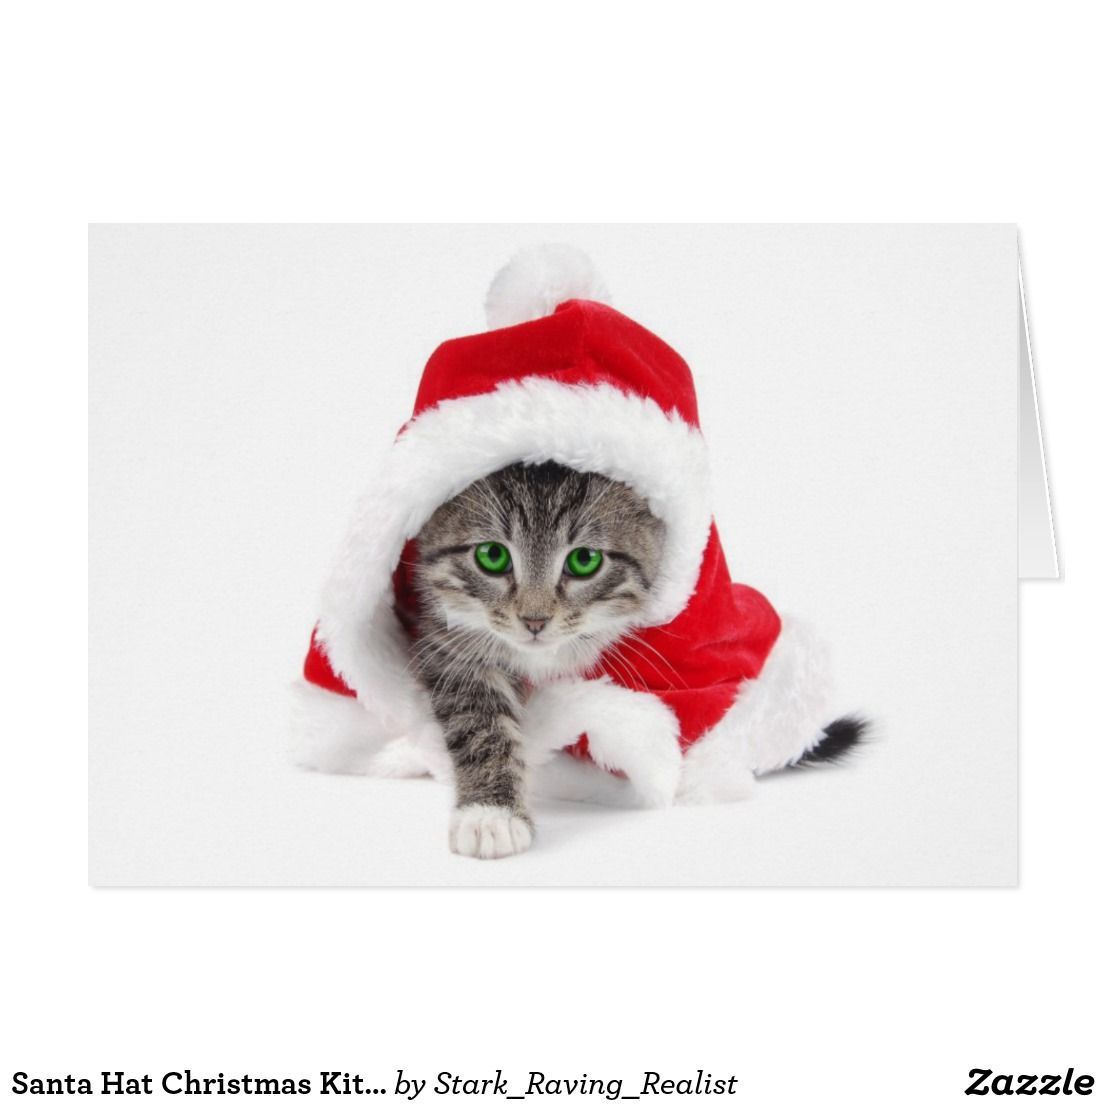 Santa Hat Christmas Kitten Holiday Card. Zazzle.com. Christmas kitten, Christmas animals, Christmas cats